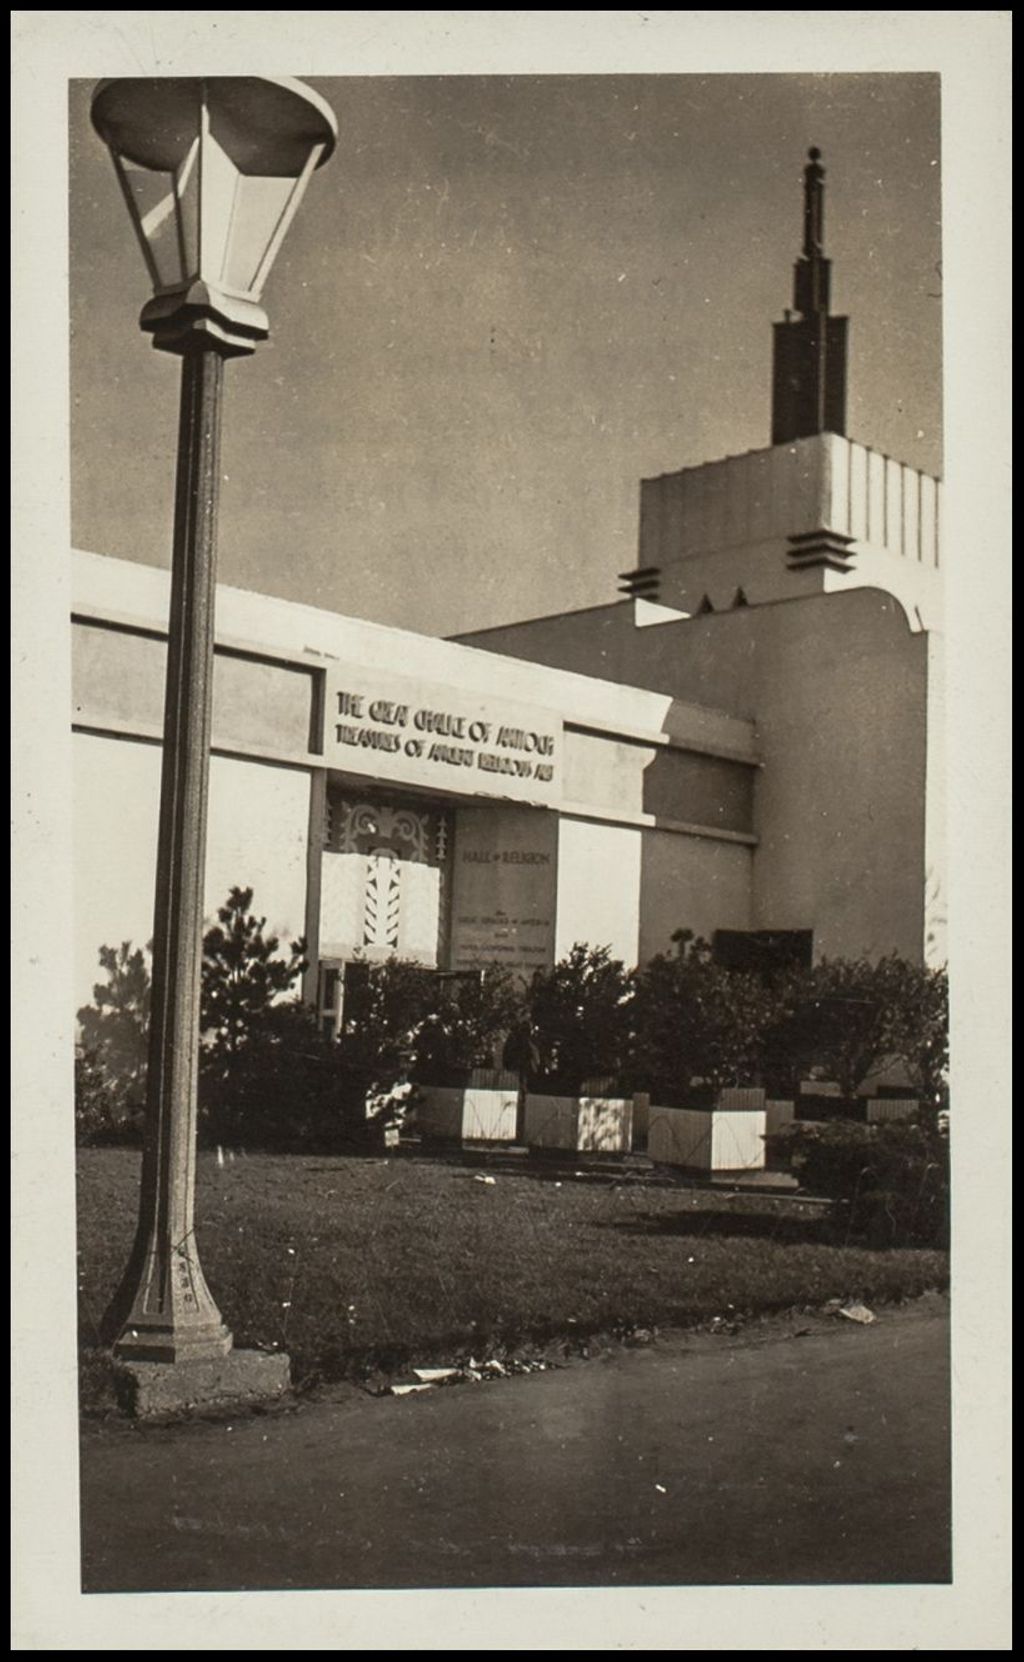 Hall of religion, 1933